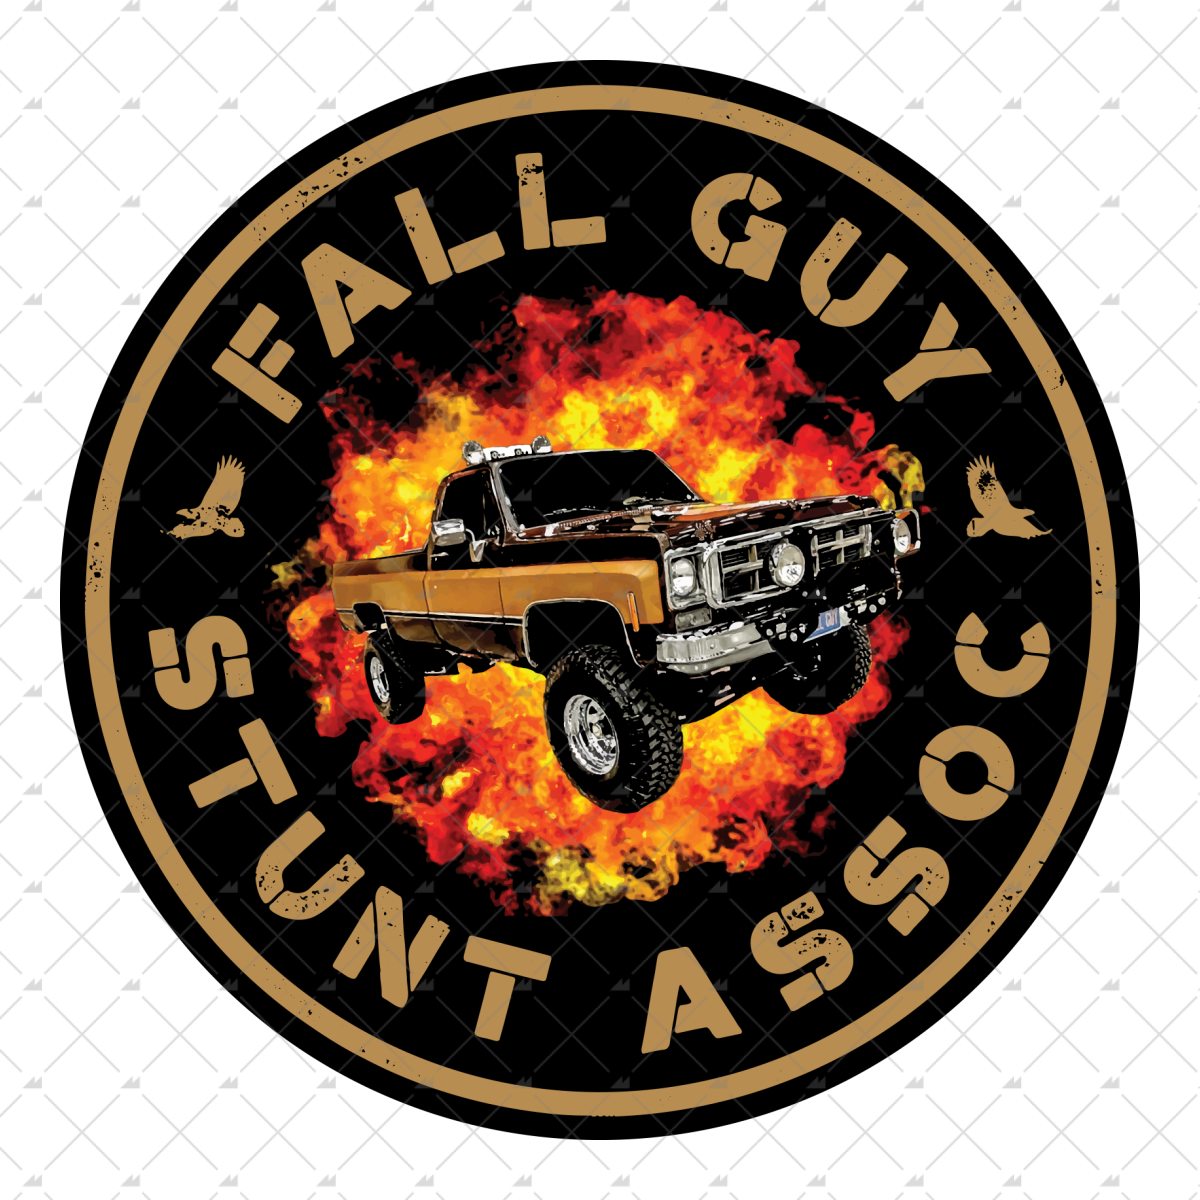 Fall Guy Stunt Association - Sticker